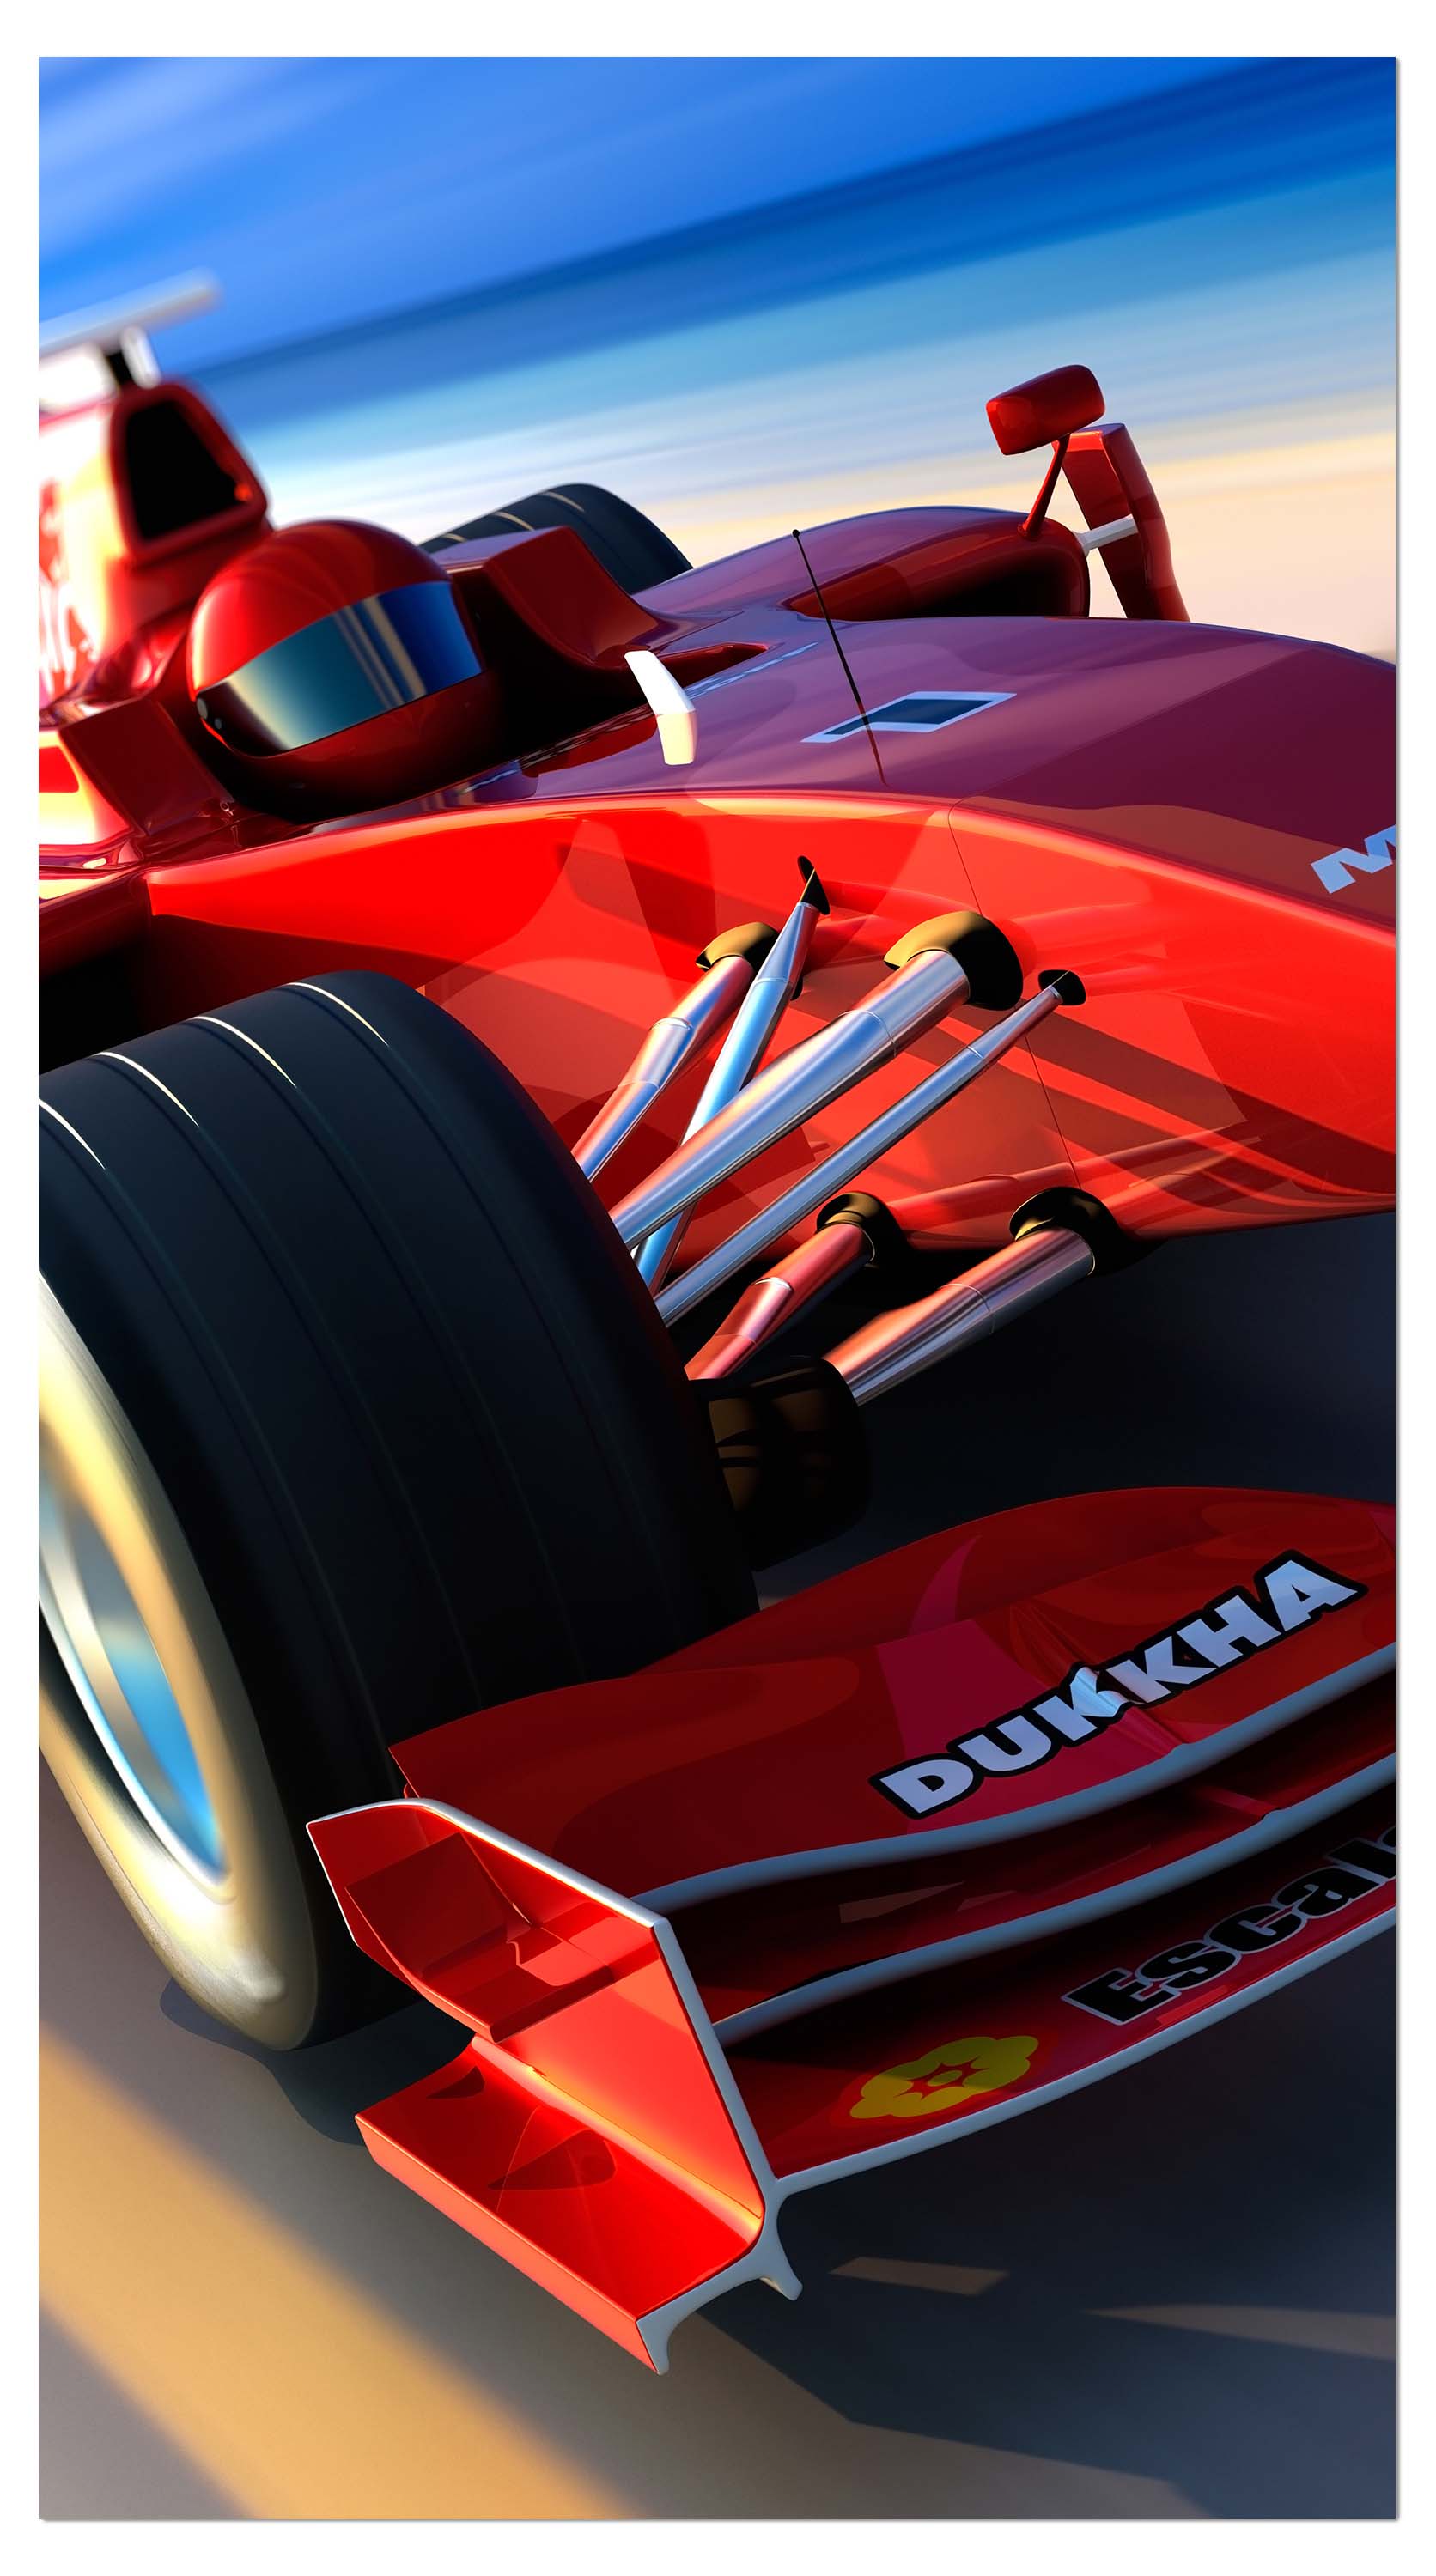 Garderobe Ferrari in Action M0376 entdecken - Bild 4